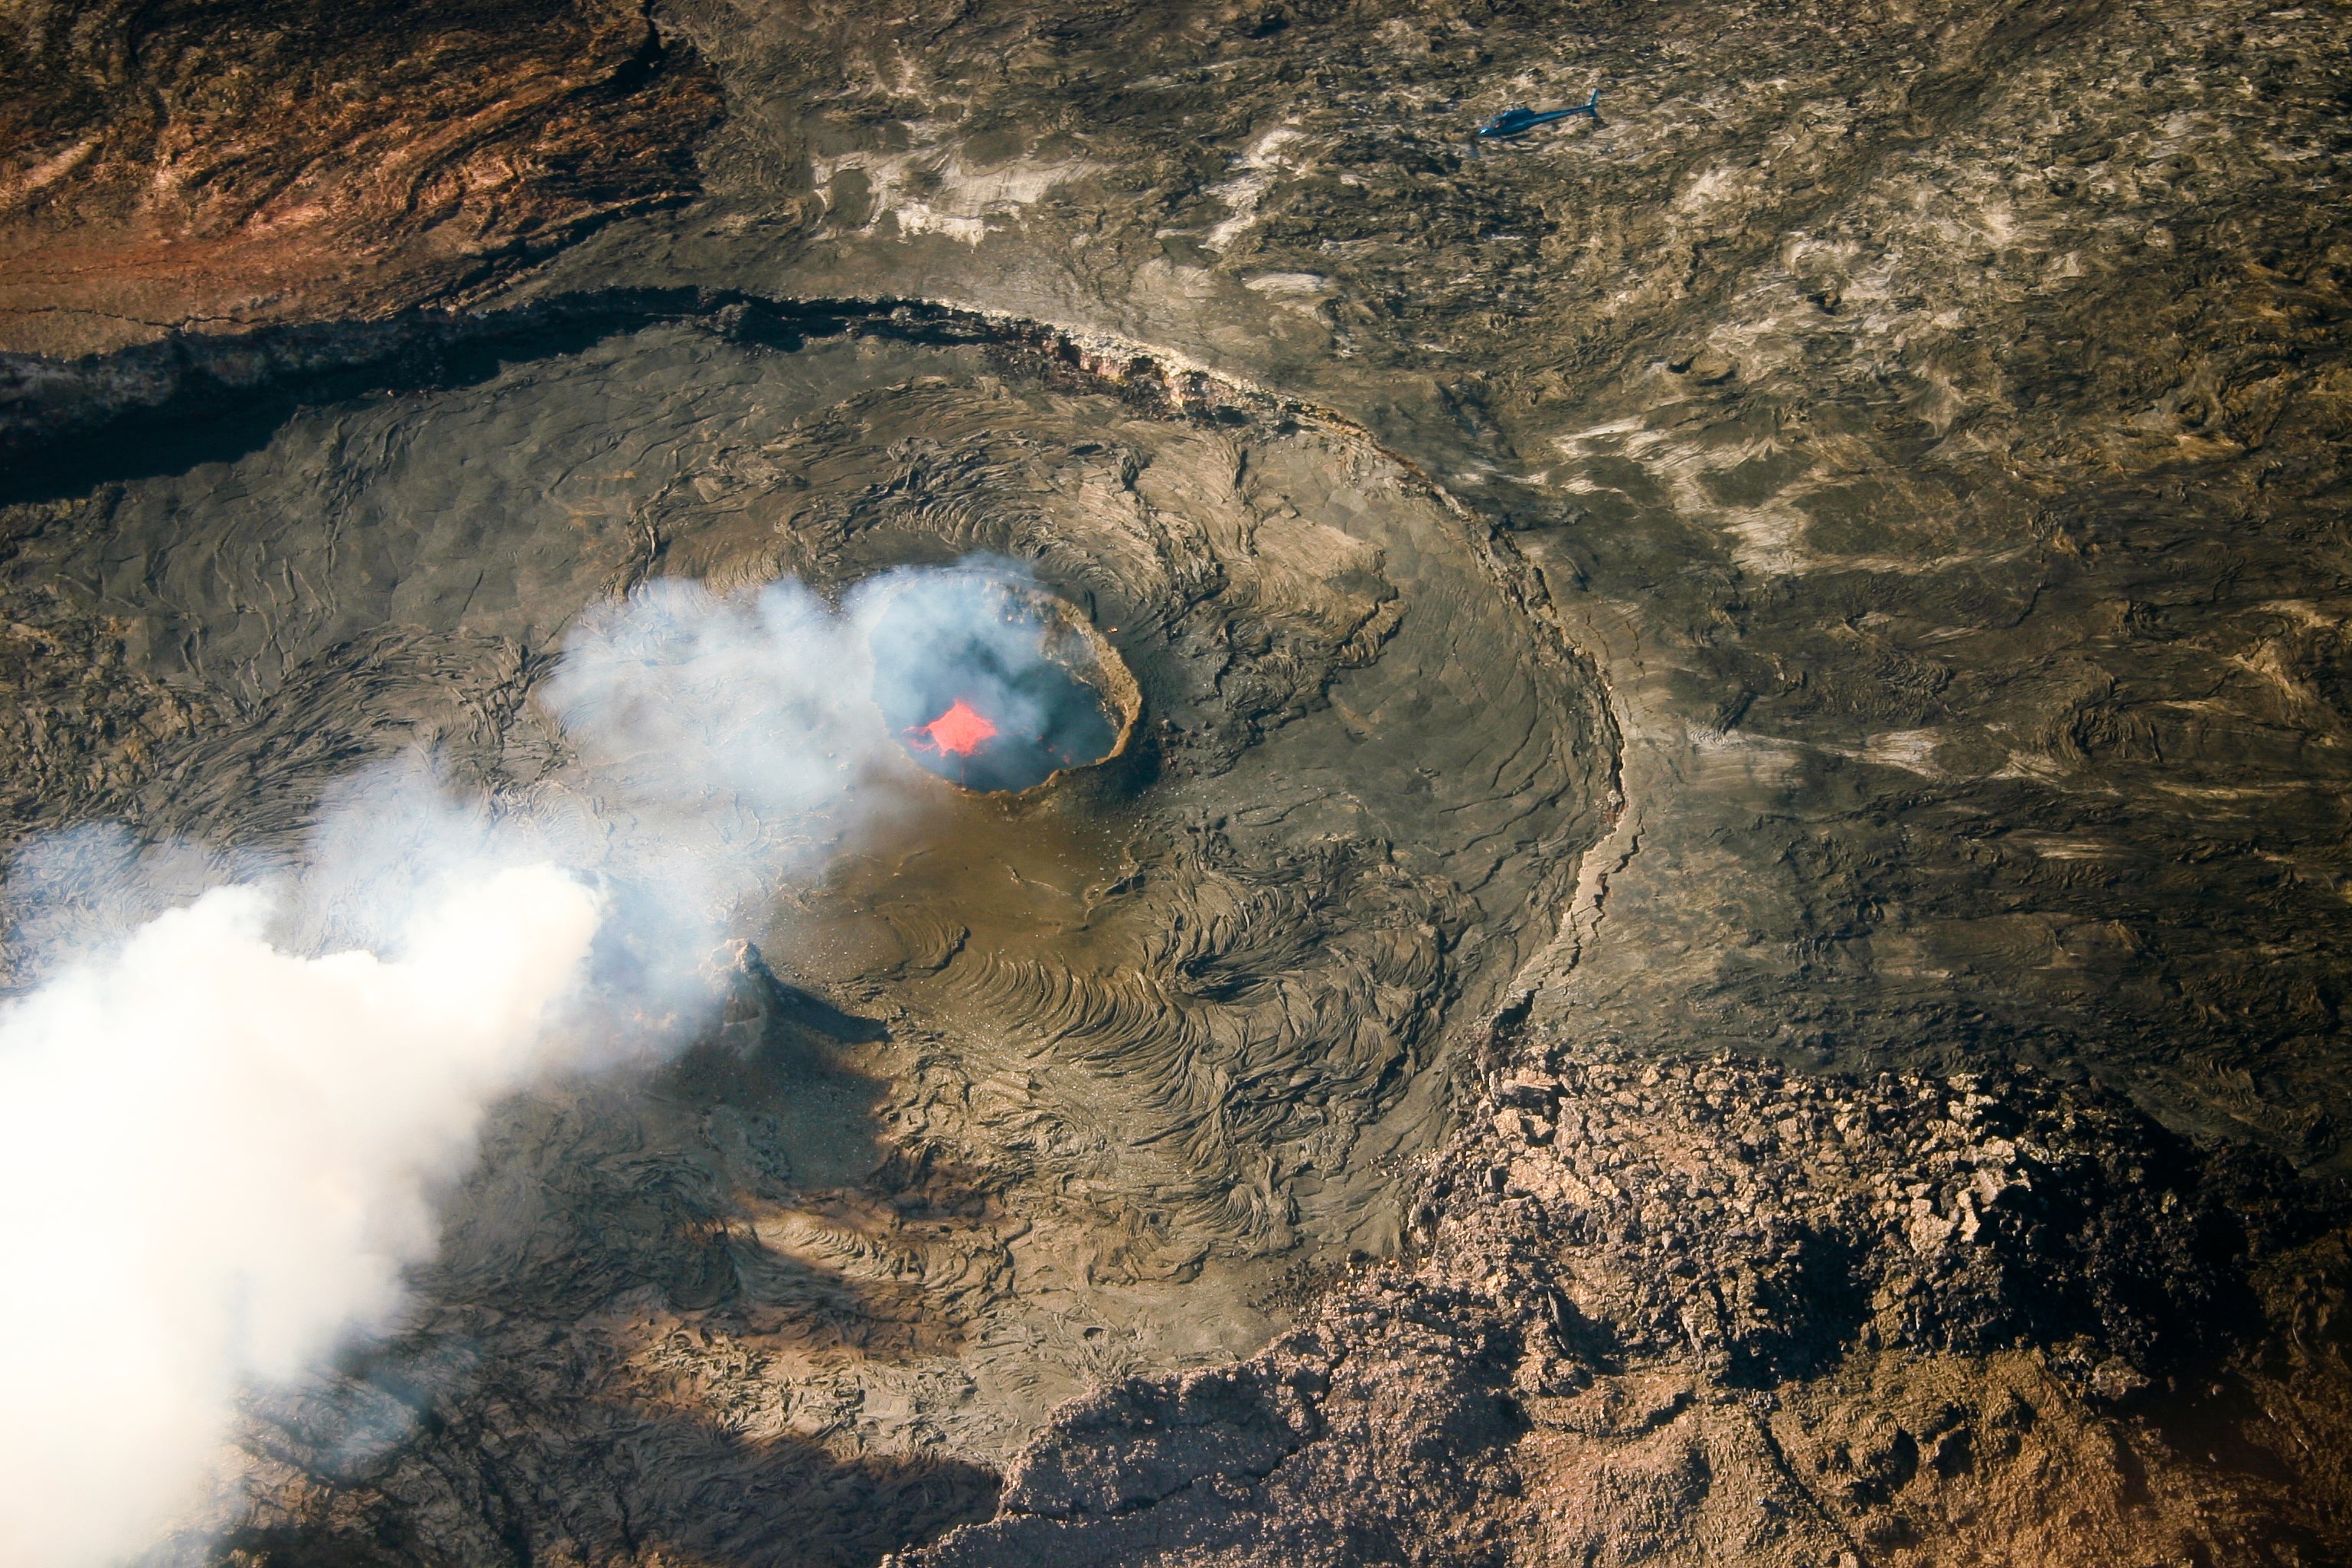 K?lauea pele erupting at the Hawaii volcanoes national park